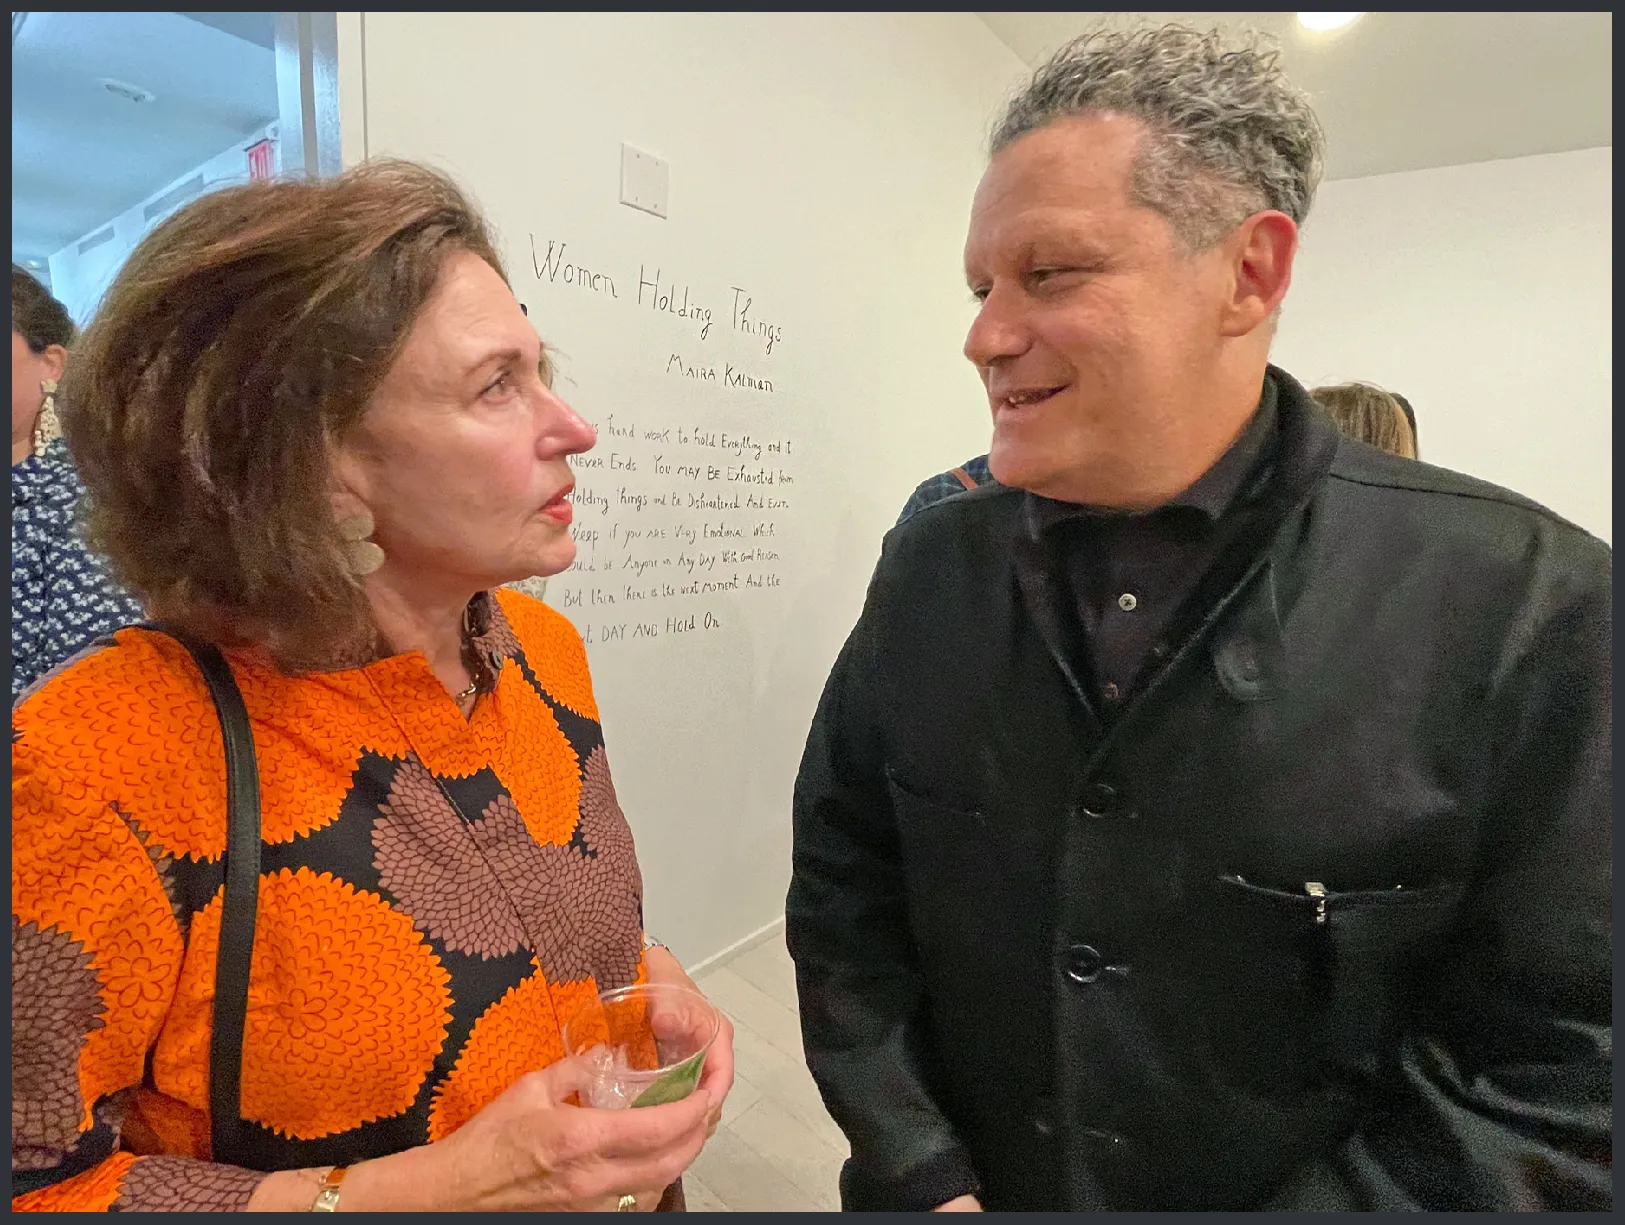 Community and cultural activist Linda Saul-Sena greets fashion designer Isaac Mizrahi, for whom Kalman designed whimsical fabrics.